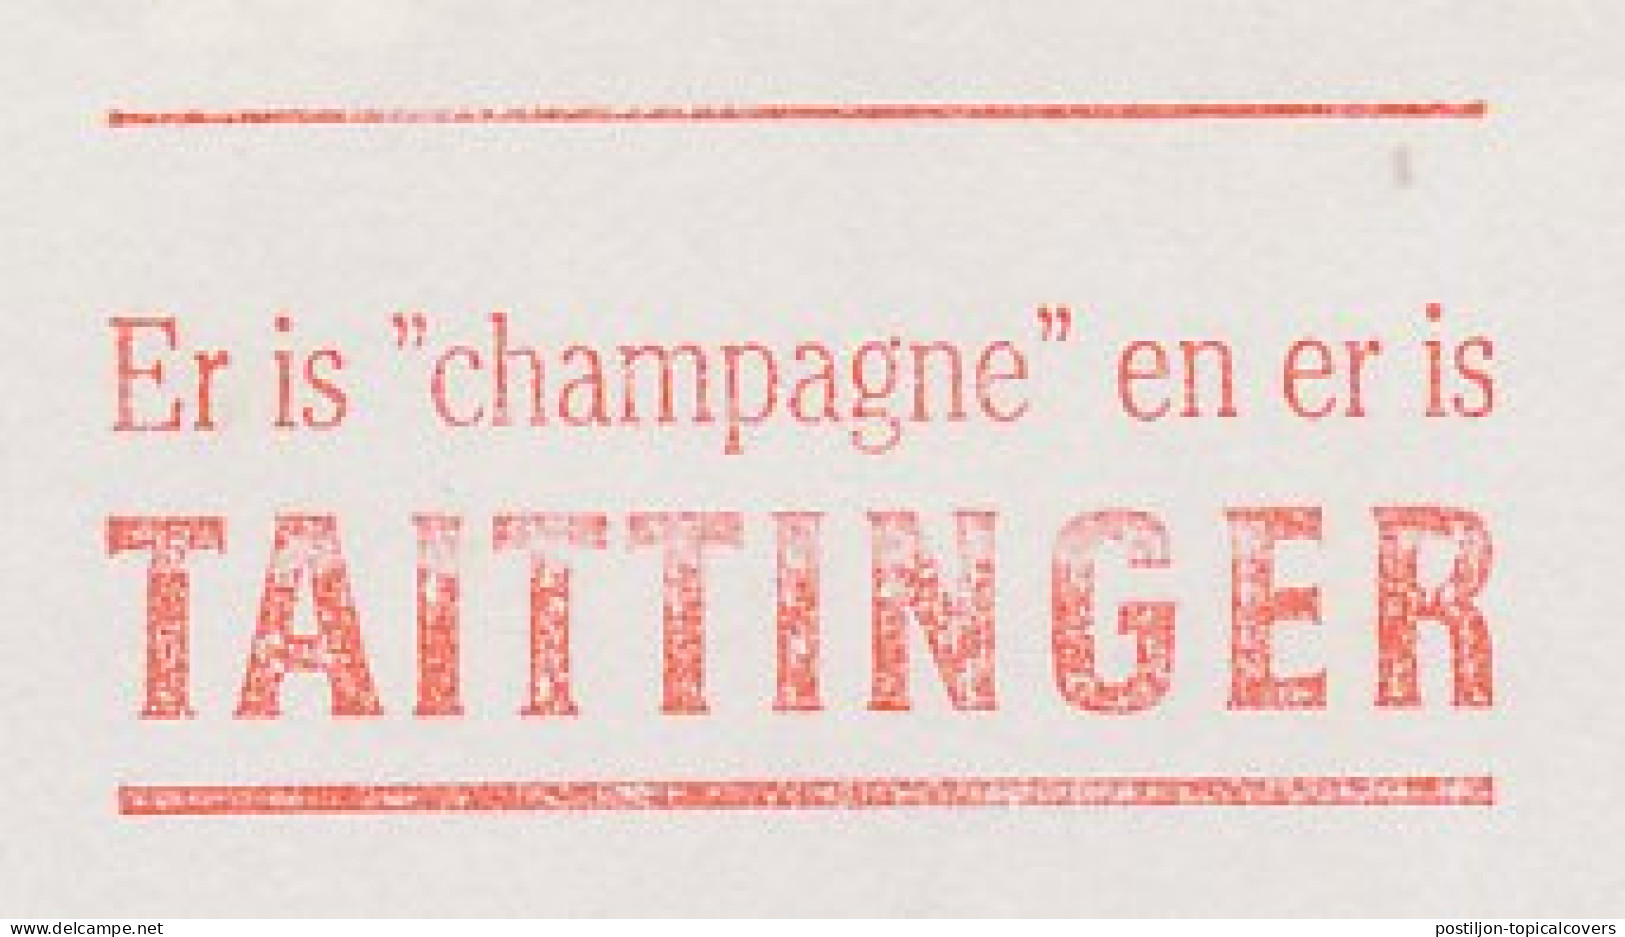 Meter Top Cut Netherlands 1988 Champagne - Taittinger - Wein & Alkohol